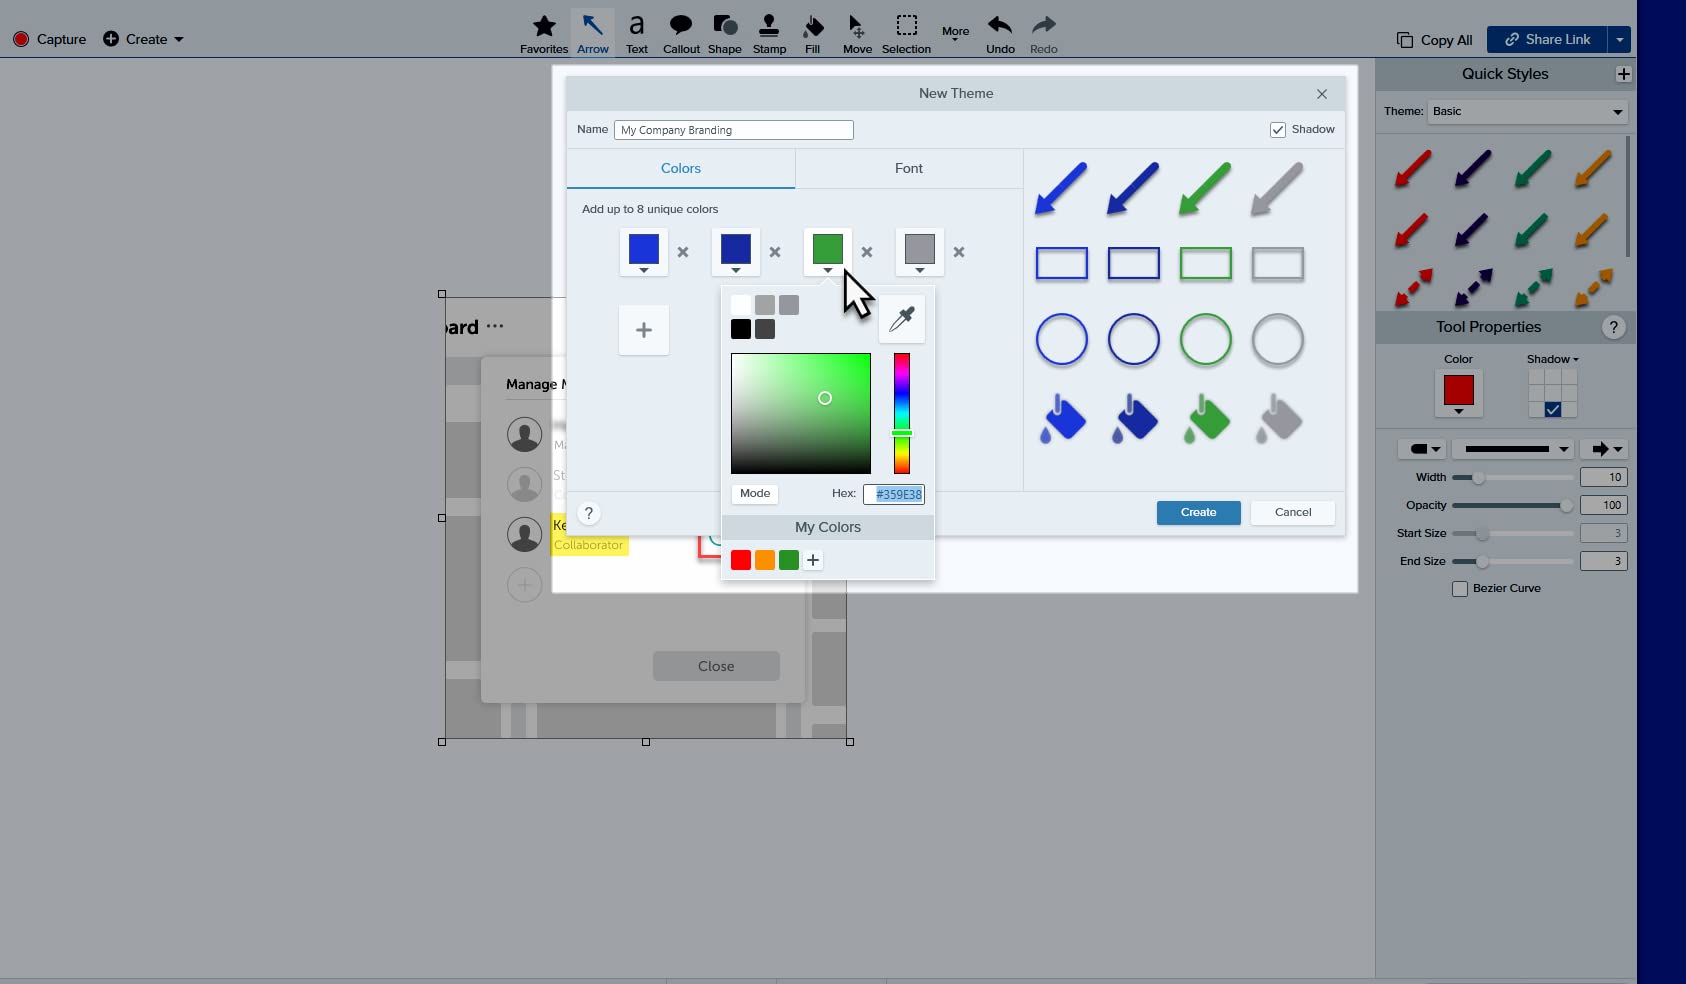 Snagit 2023 - Screen Capture & Image Editor [PC/Mac Online Code]